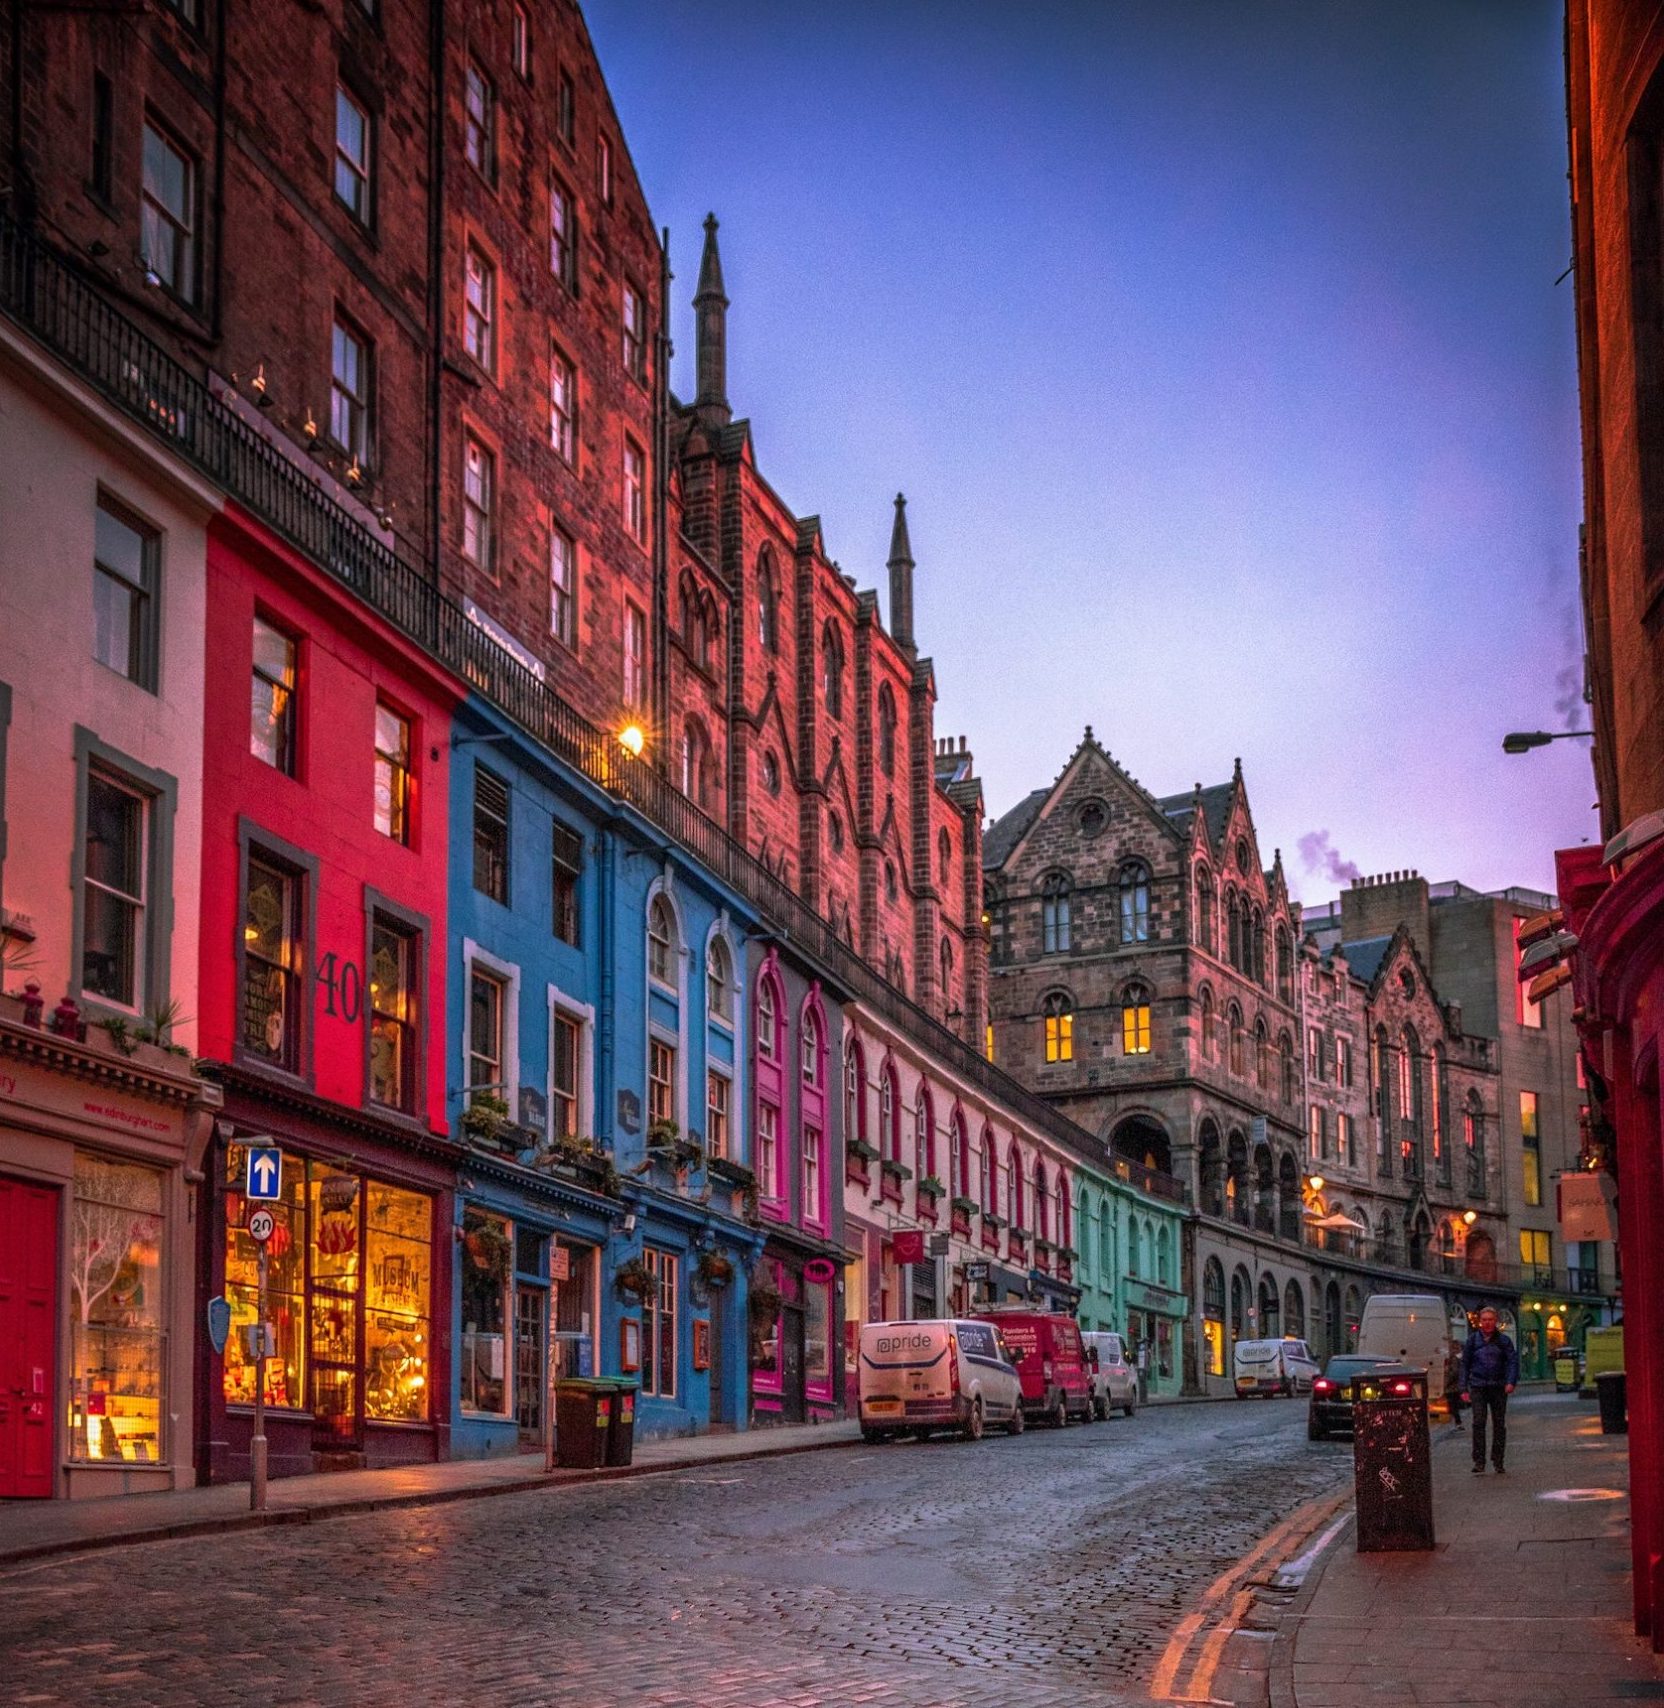 Edinburgh is on the ancestry cruise around British Isles